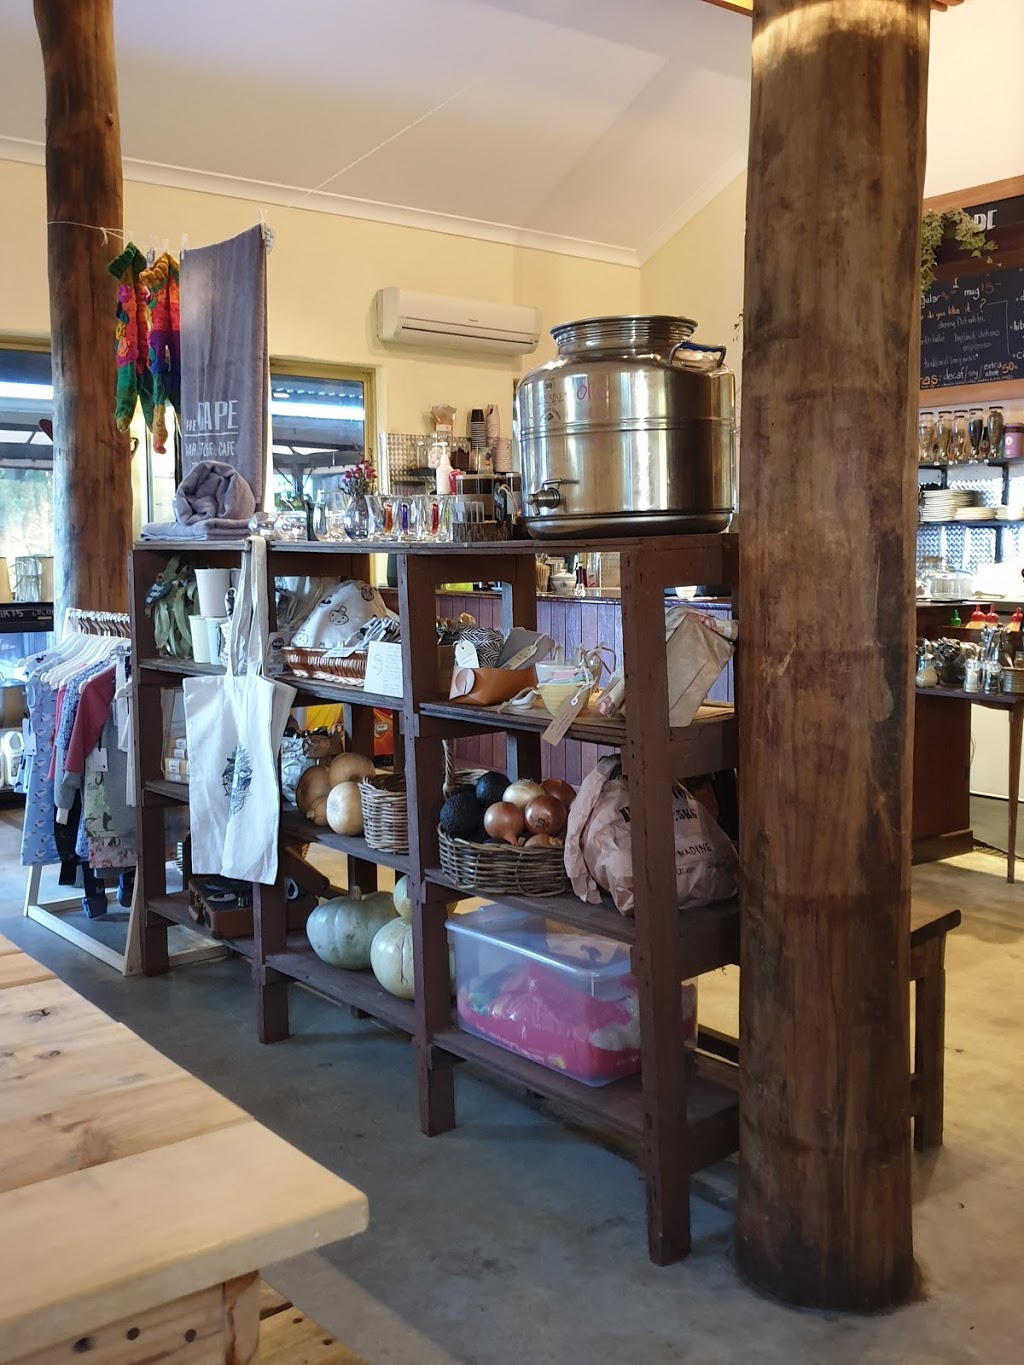 The CAPE Bar.Store.Cafe | Unit 1/256 Cosy Corner Rd, Kronkup WA 6330, Australia | Phone: (08) 9845 1000